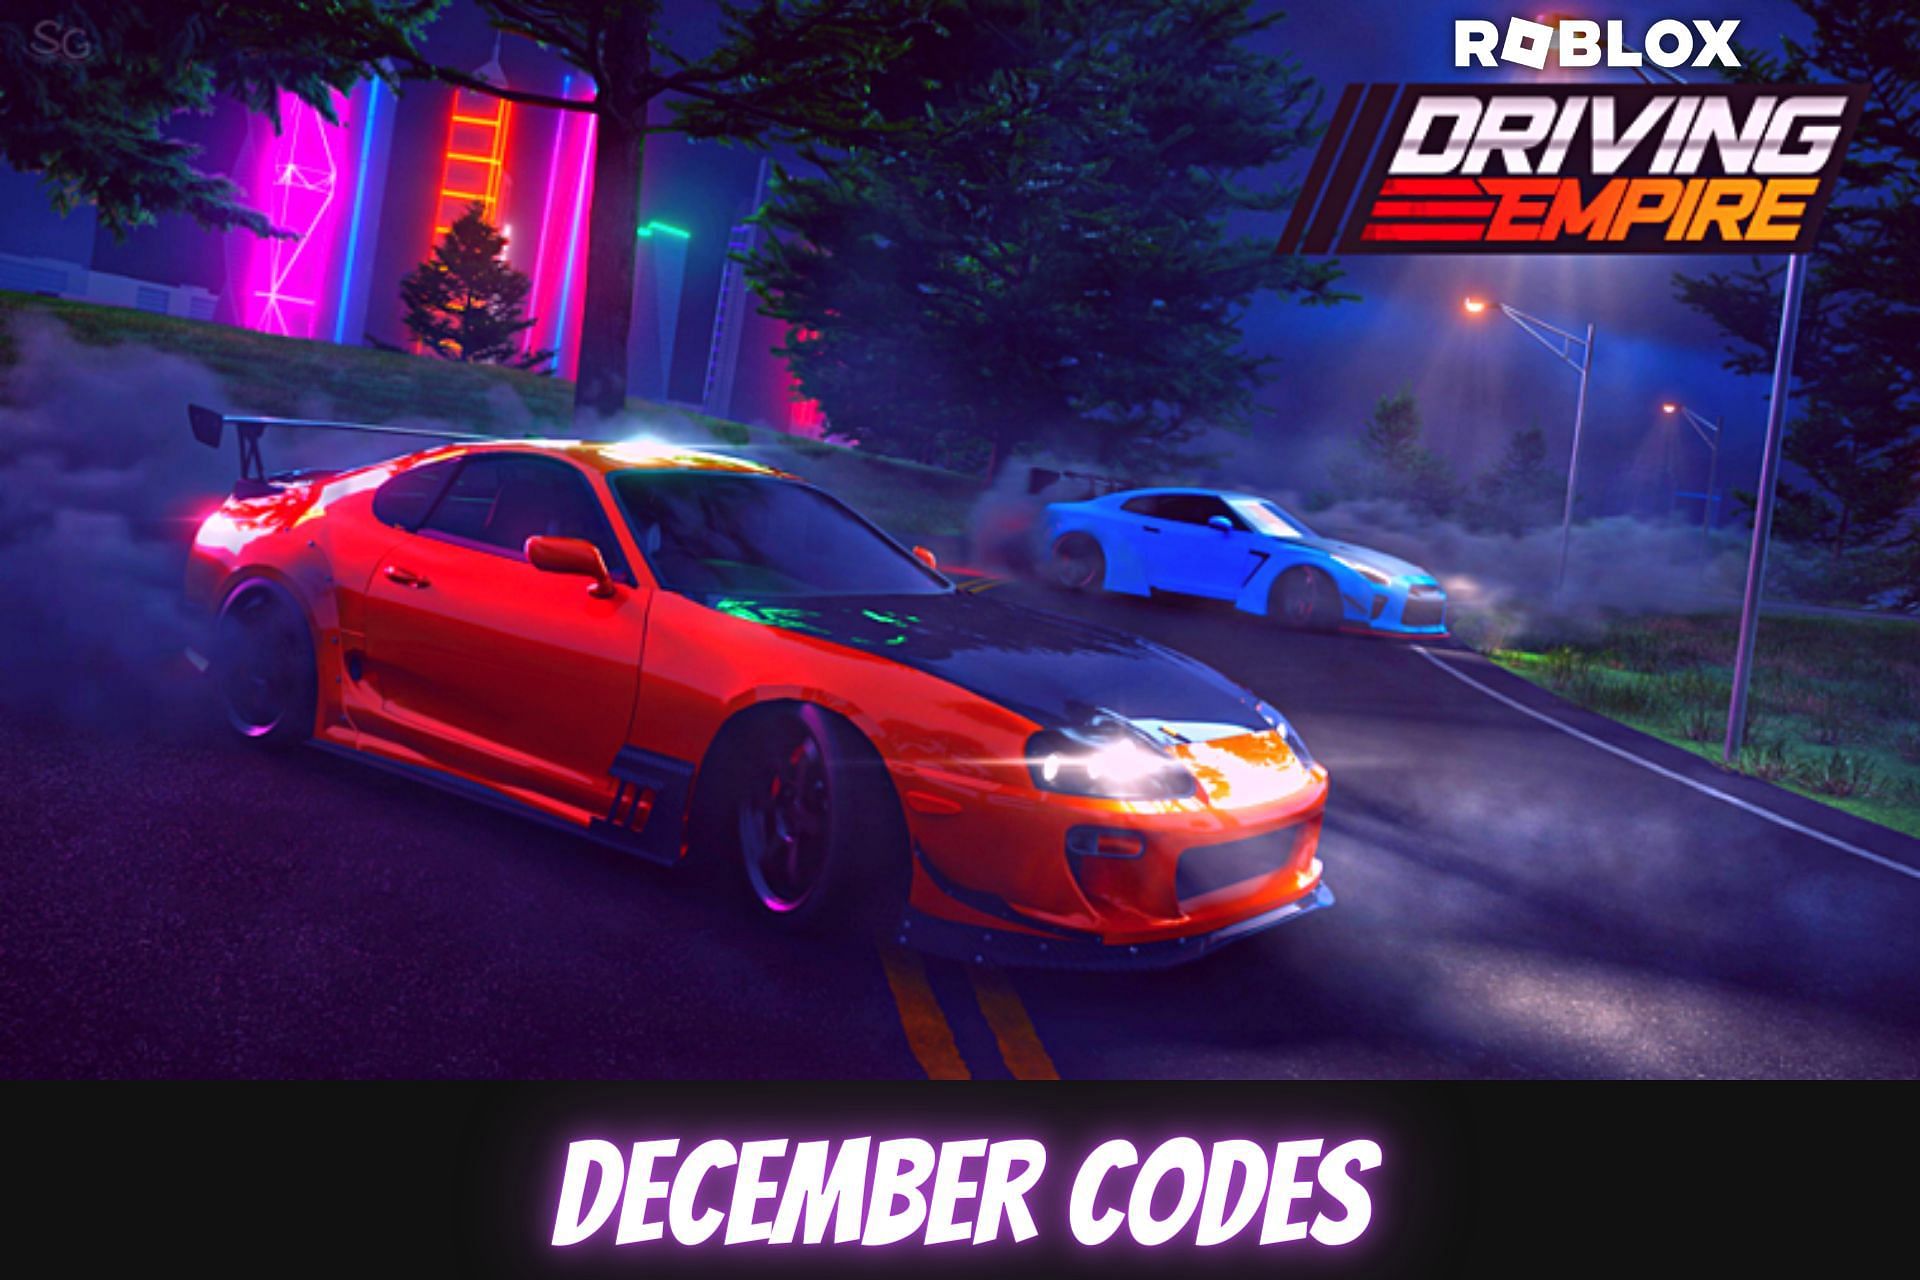 Roblox Driving Empire codes (December 2022)